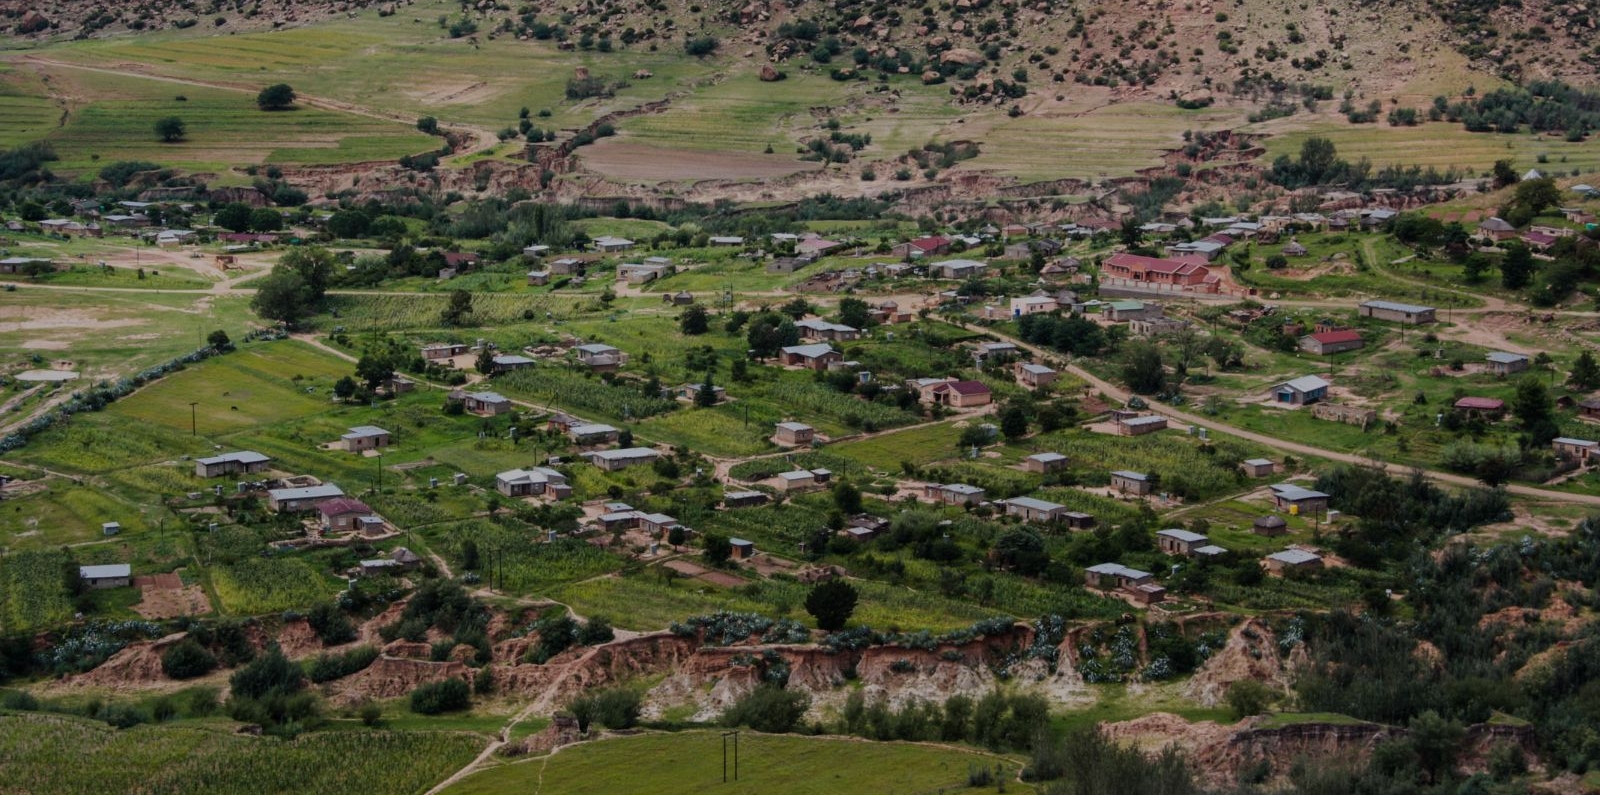 Lesotho scenery